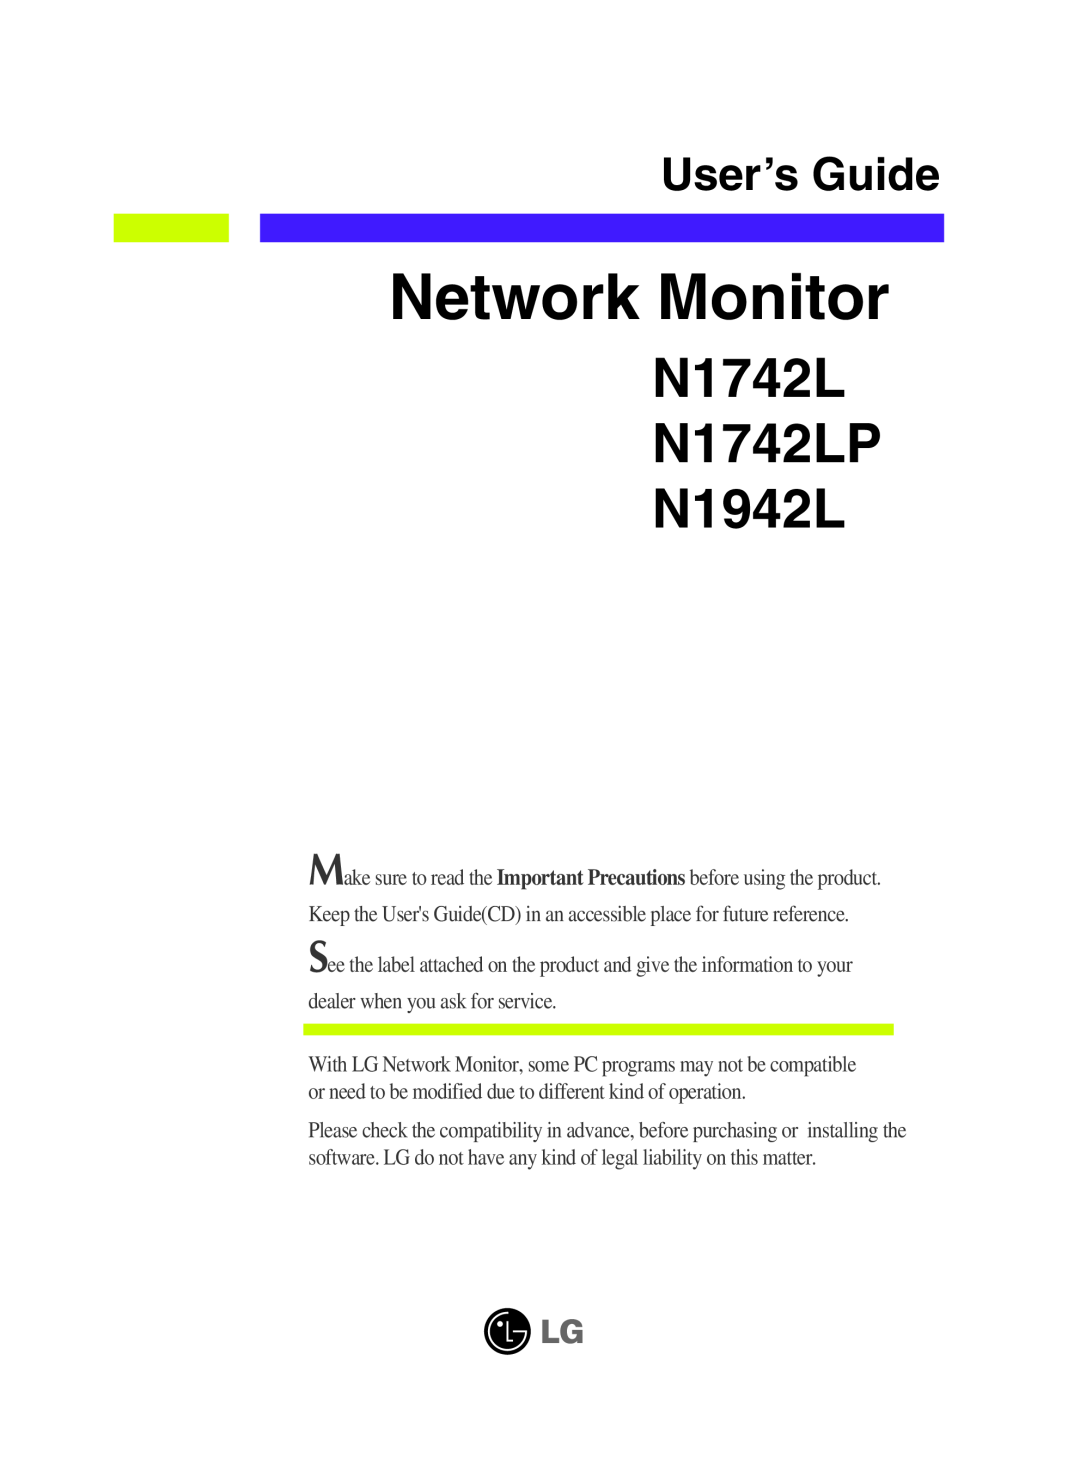 LG Electronics manual Network Monitor, N1742L N1742LP N1942L, User’s Guide 